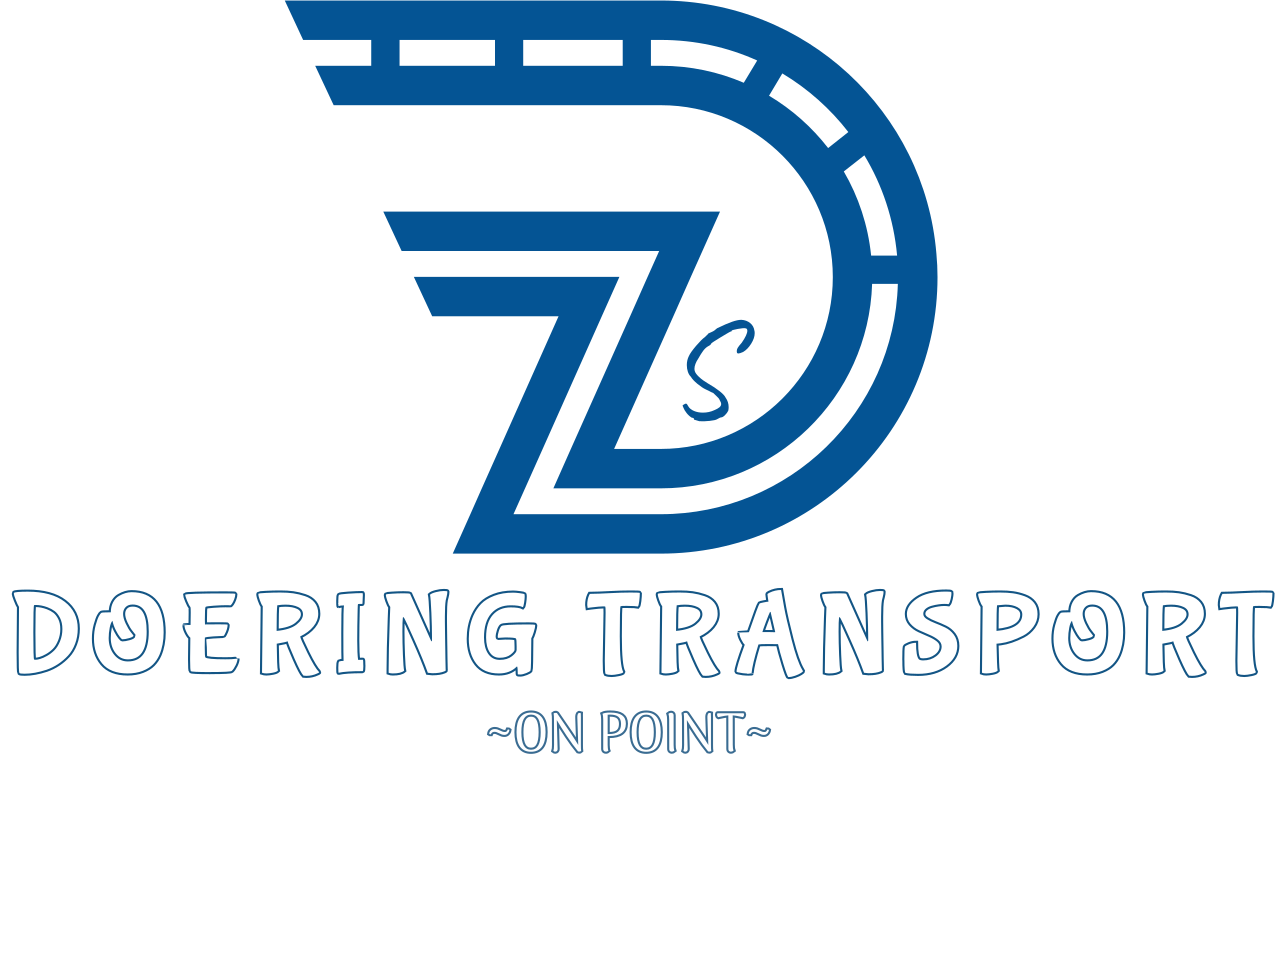 DOERING TRANSPORT 's web page